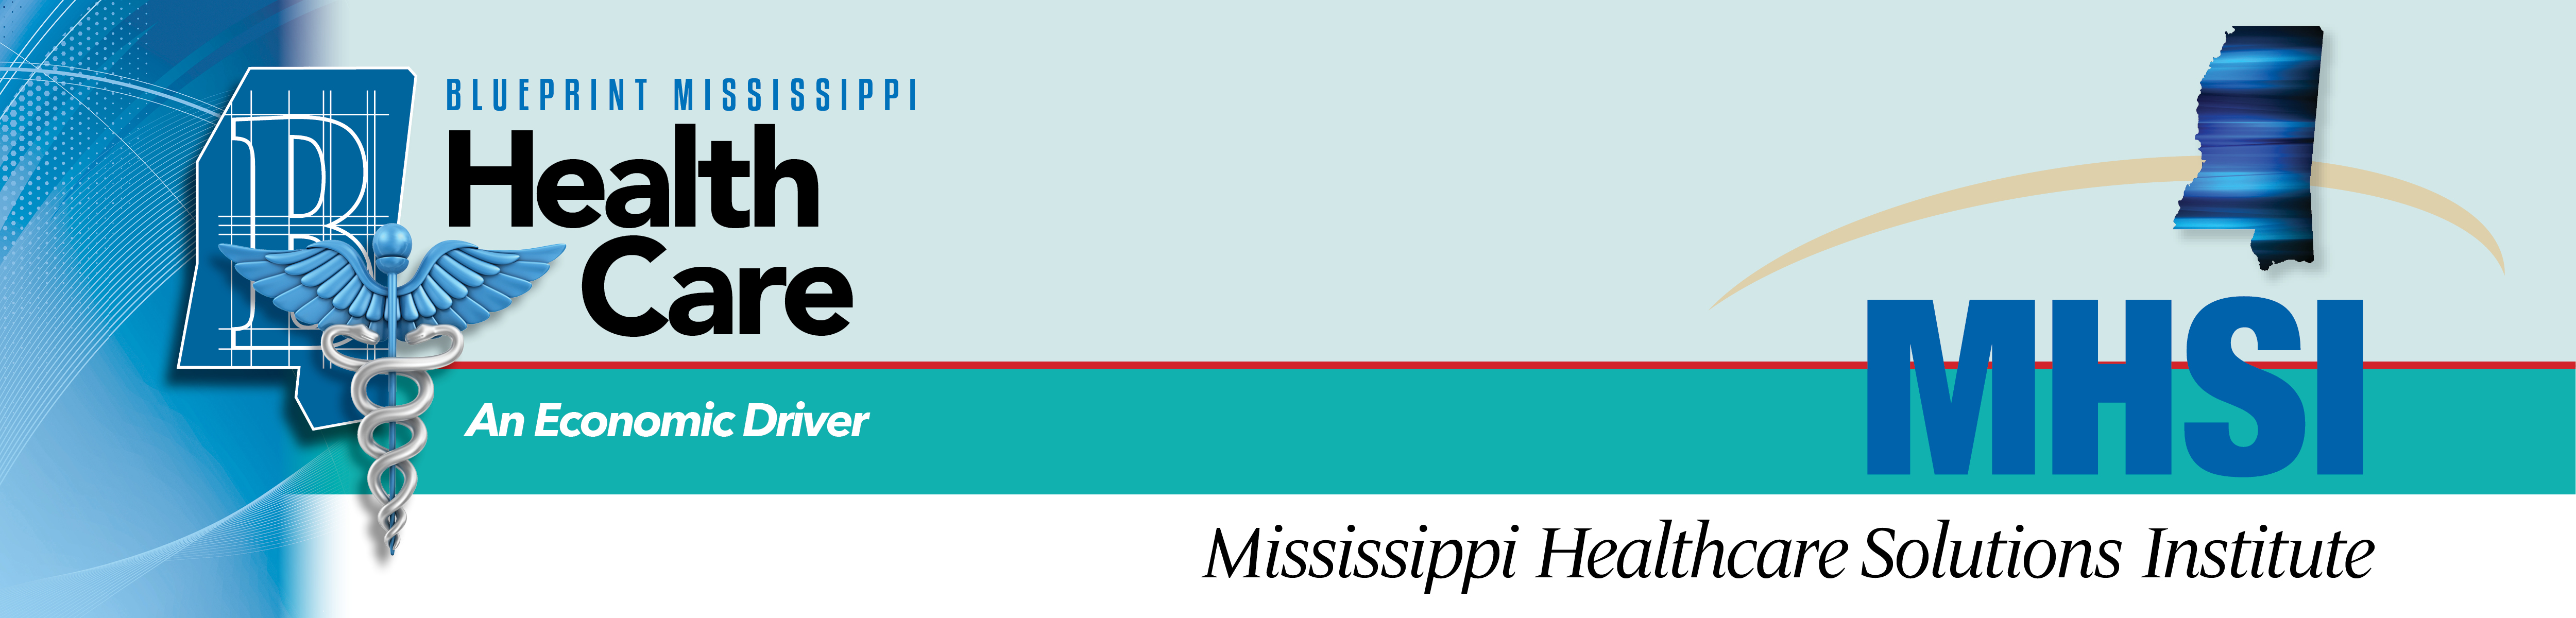 Mississippi Healthcare Solutions Institute